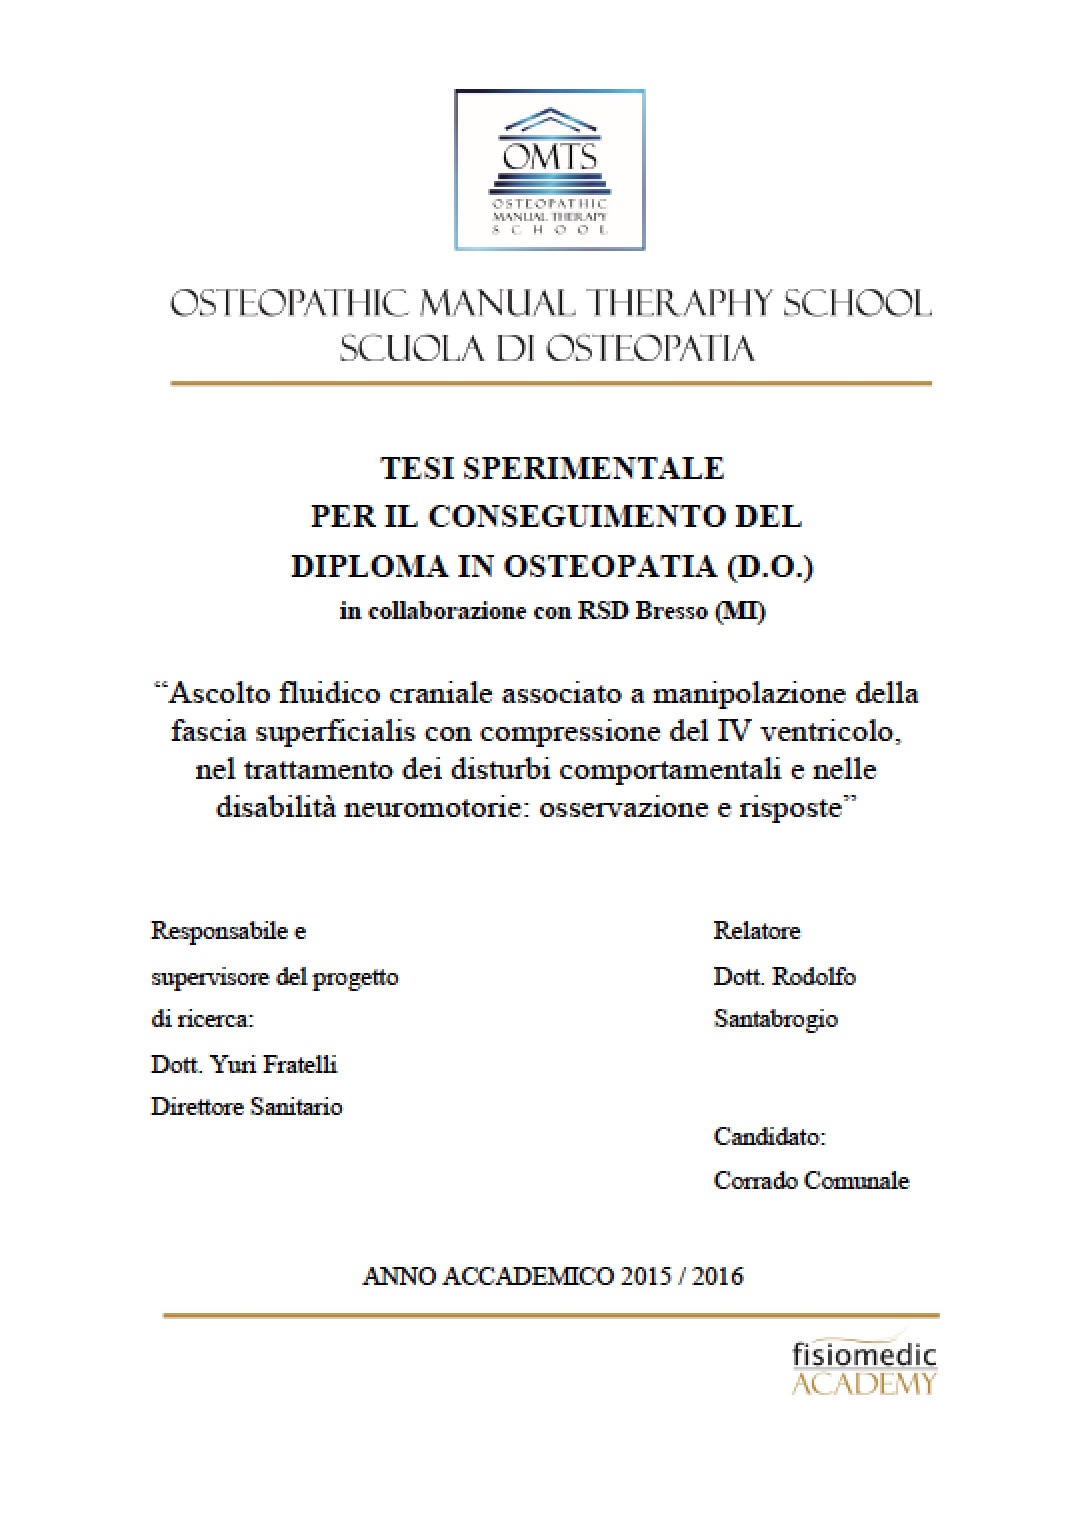 Corrado Comunale Tesi Diploma Osteopatia 2016